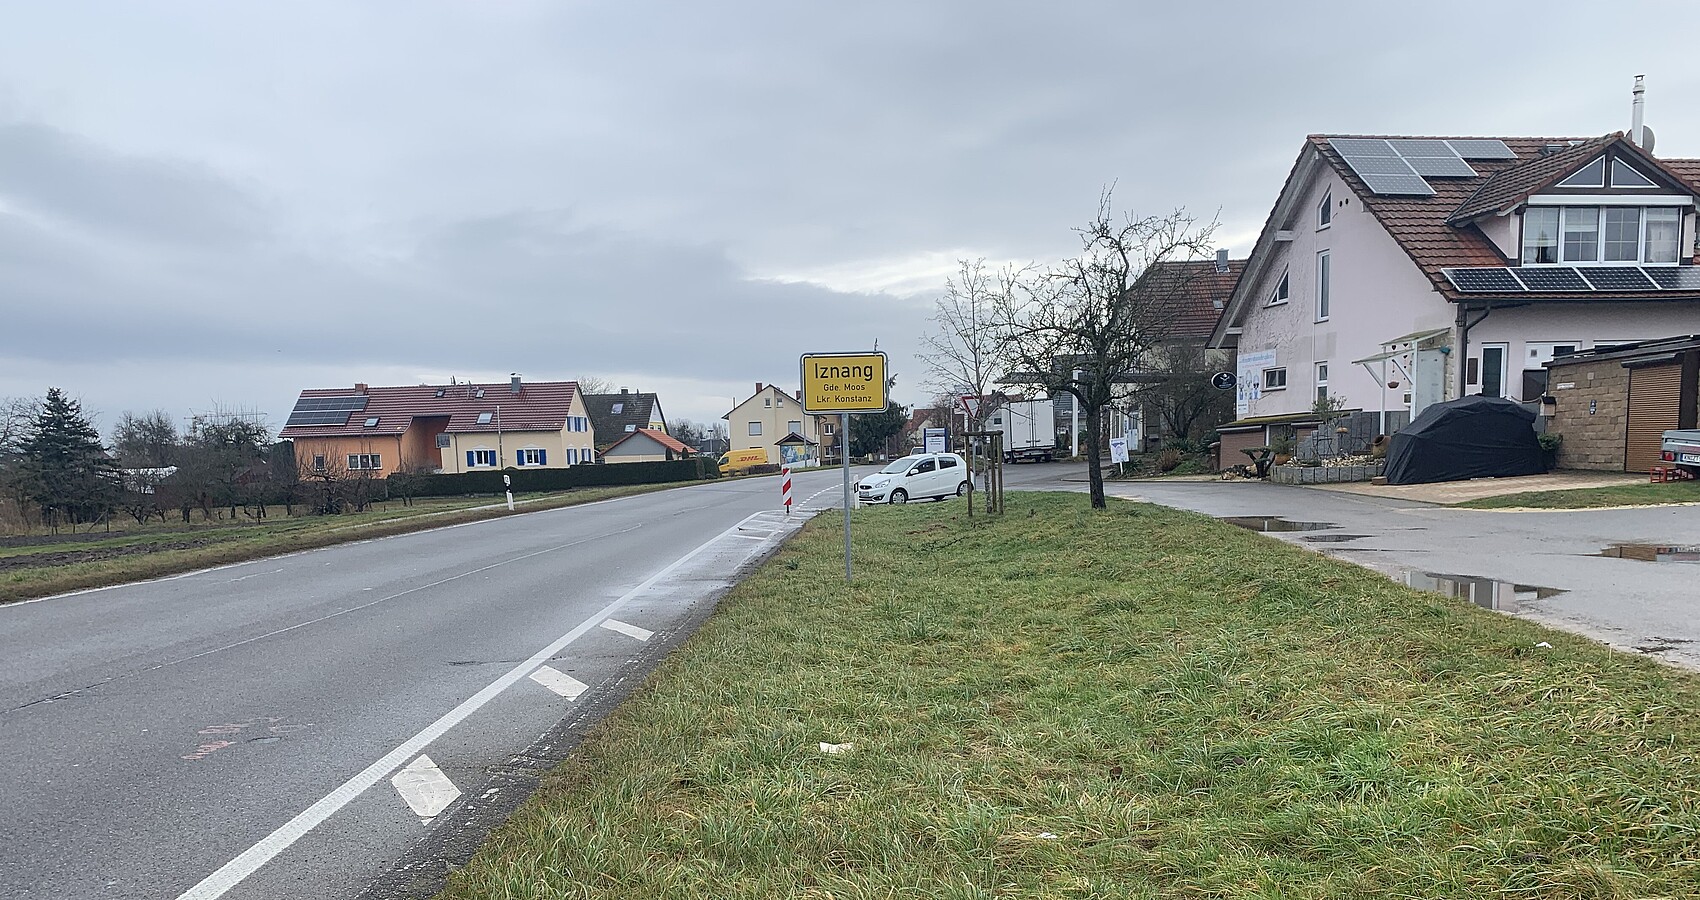 Straße am Eingang des Ortes Iznang (Kreis Konstanz)